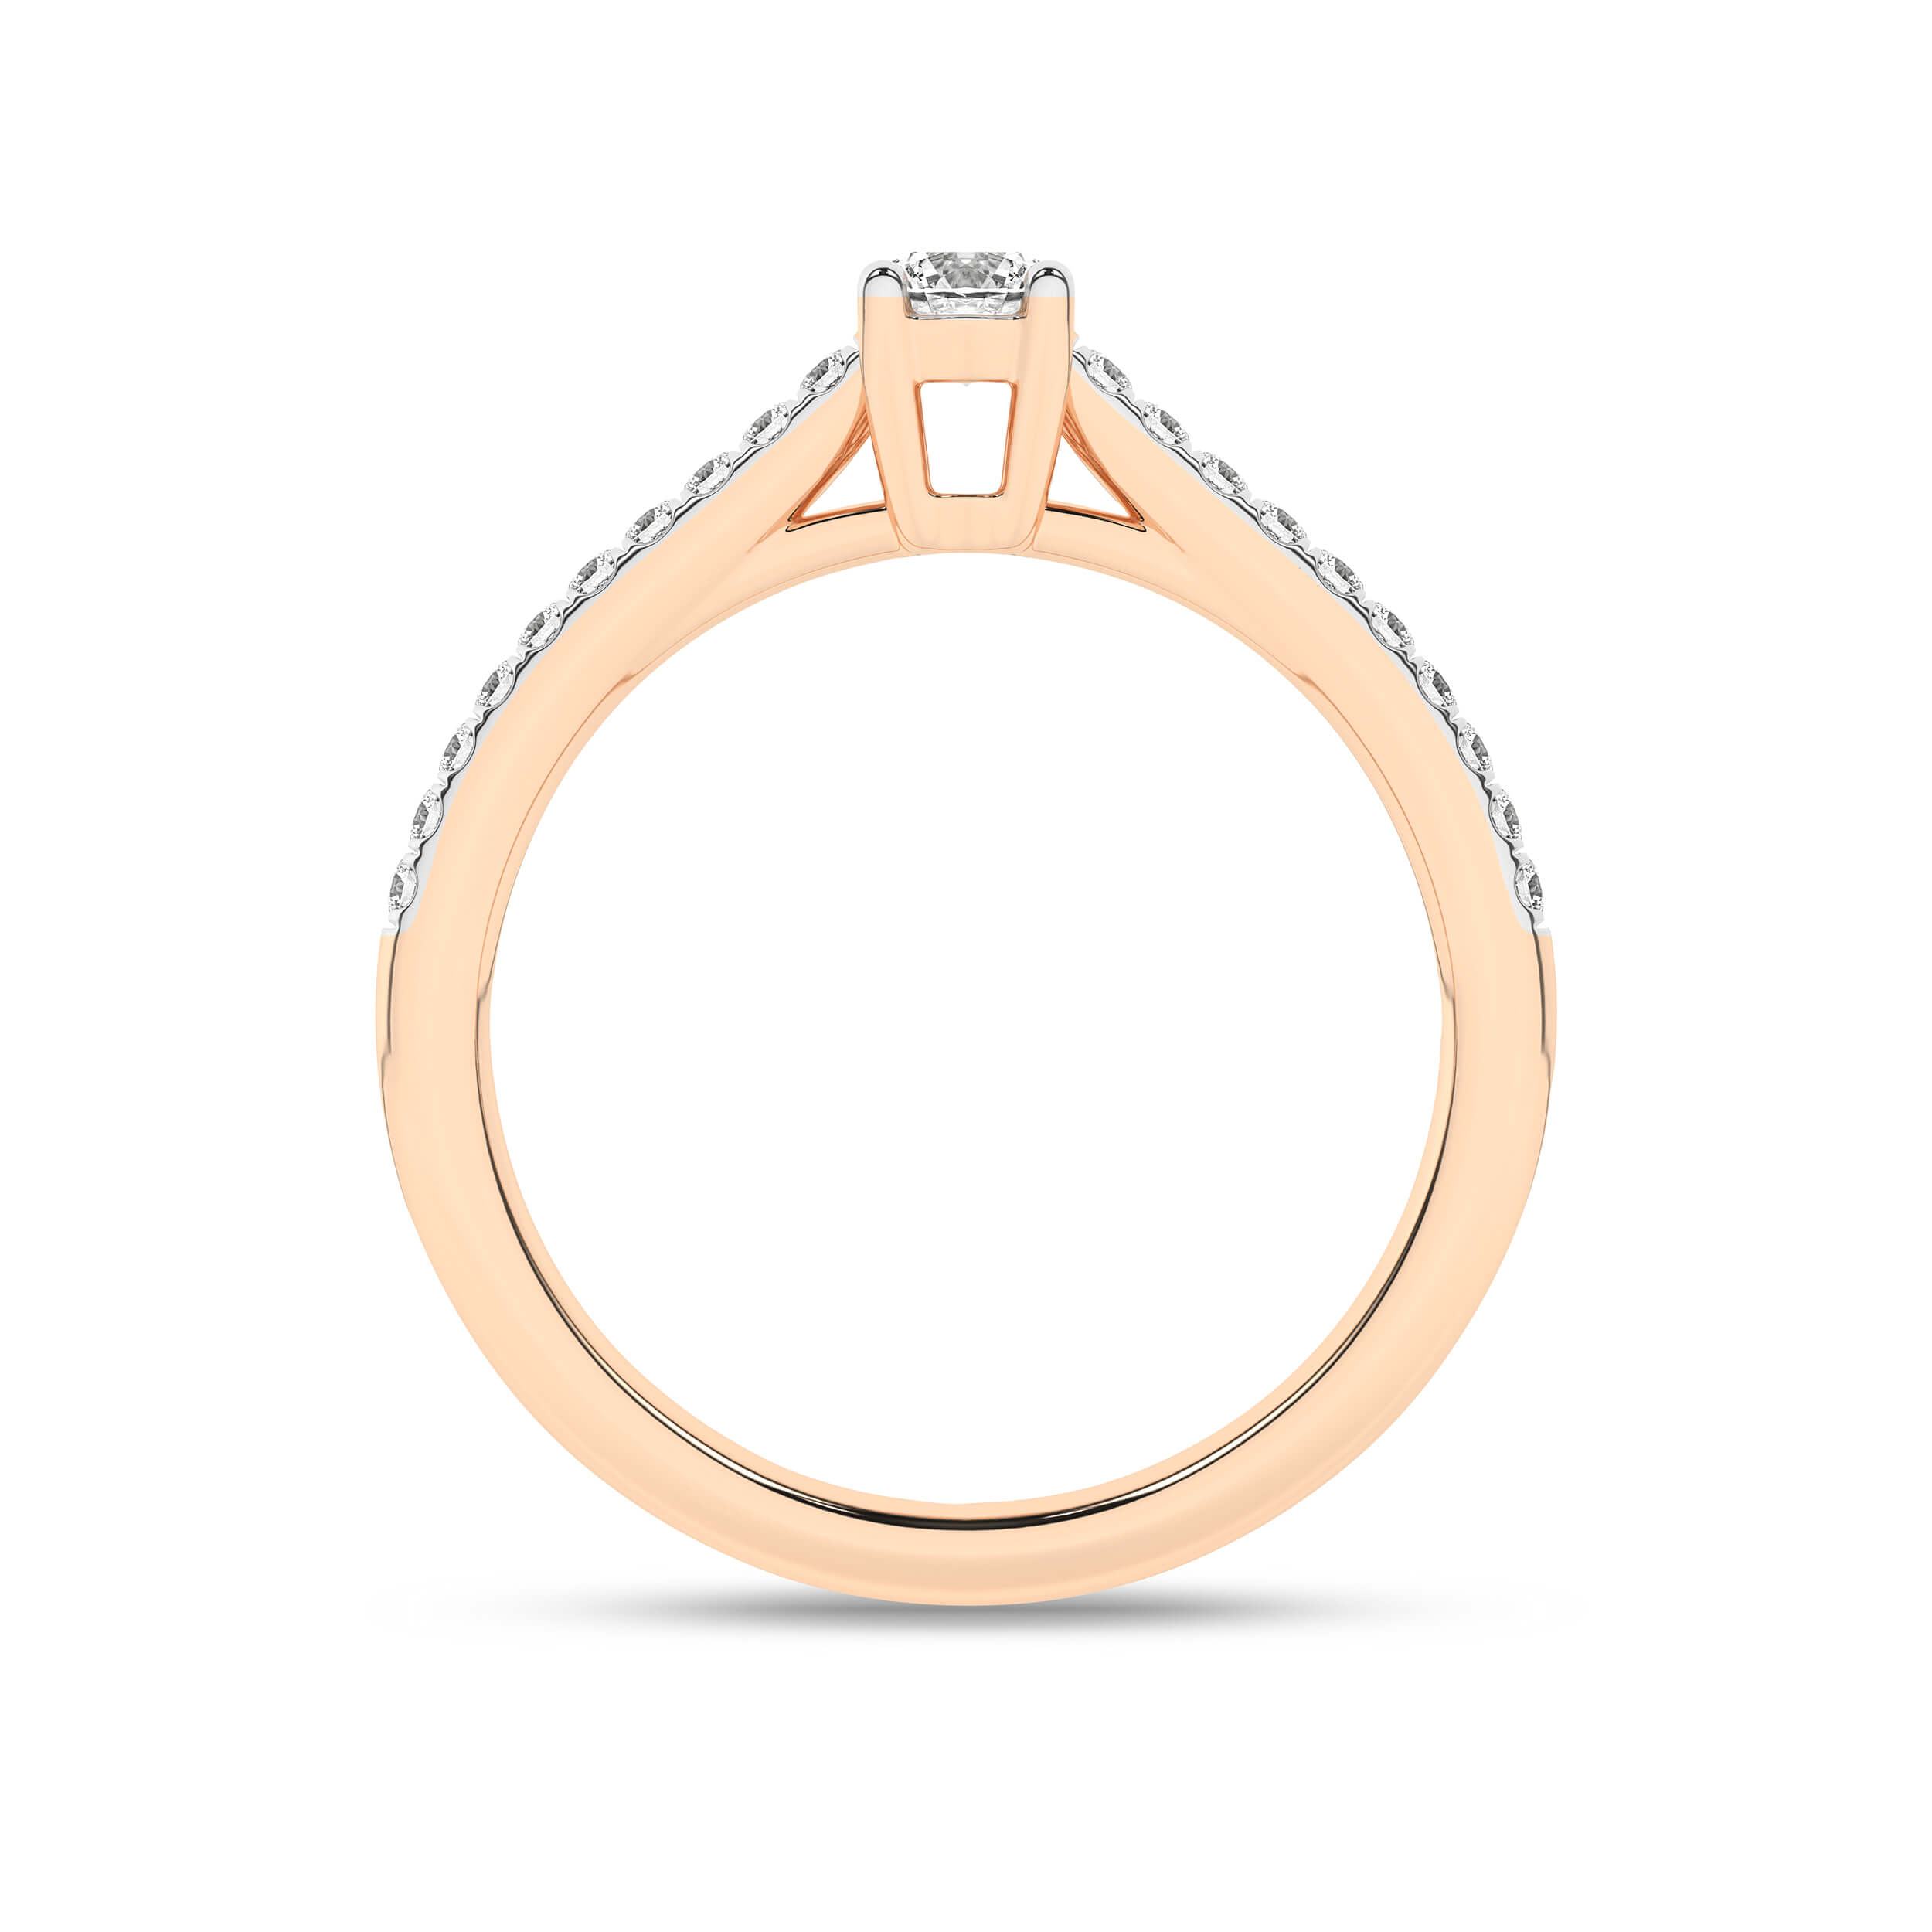 Inel de logodna din Aur Roz 14K cu Diamante 0.25Ct, articol RB19582EG, previzualizare foto 2